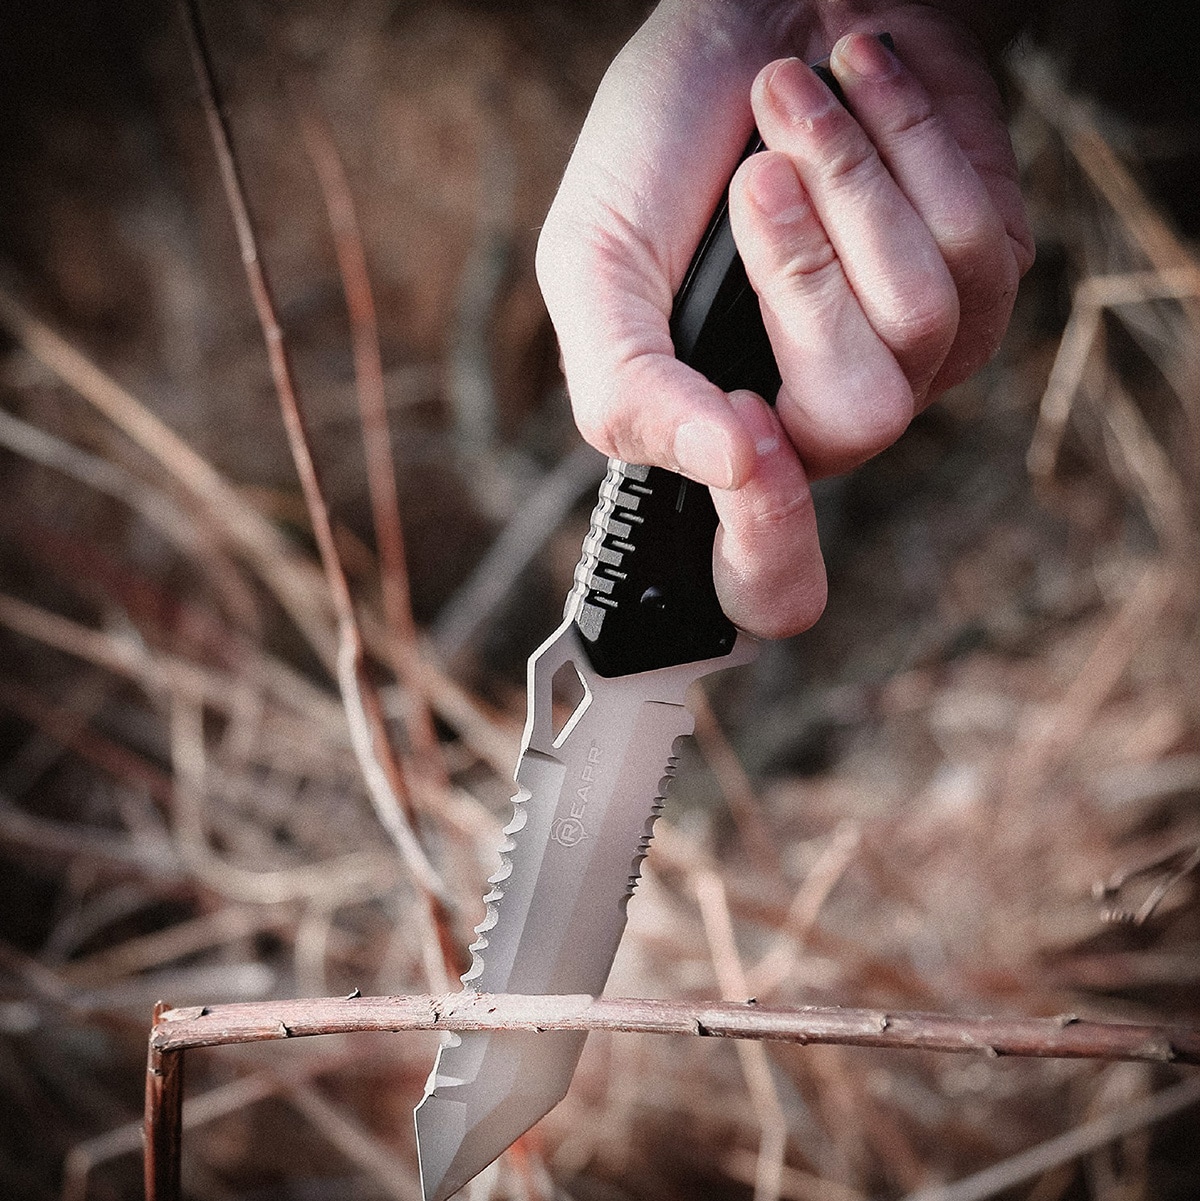 Nóż Reapr Javelin Fixed Blade Knife